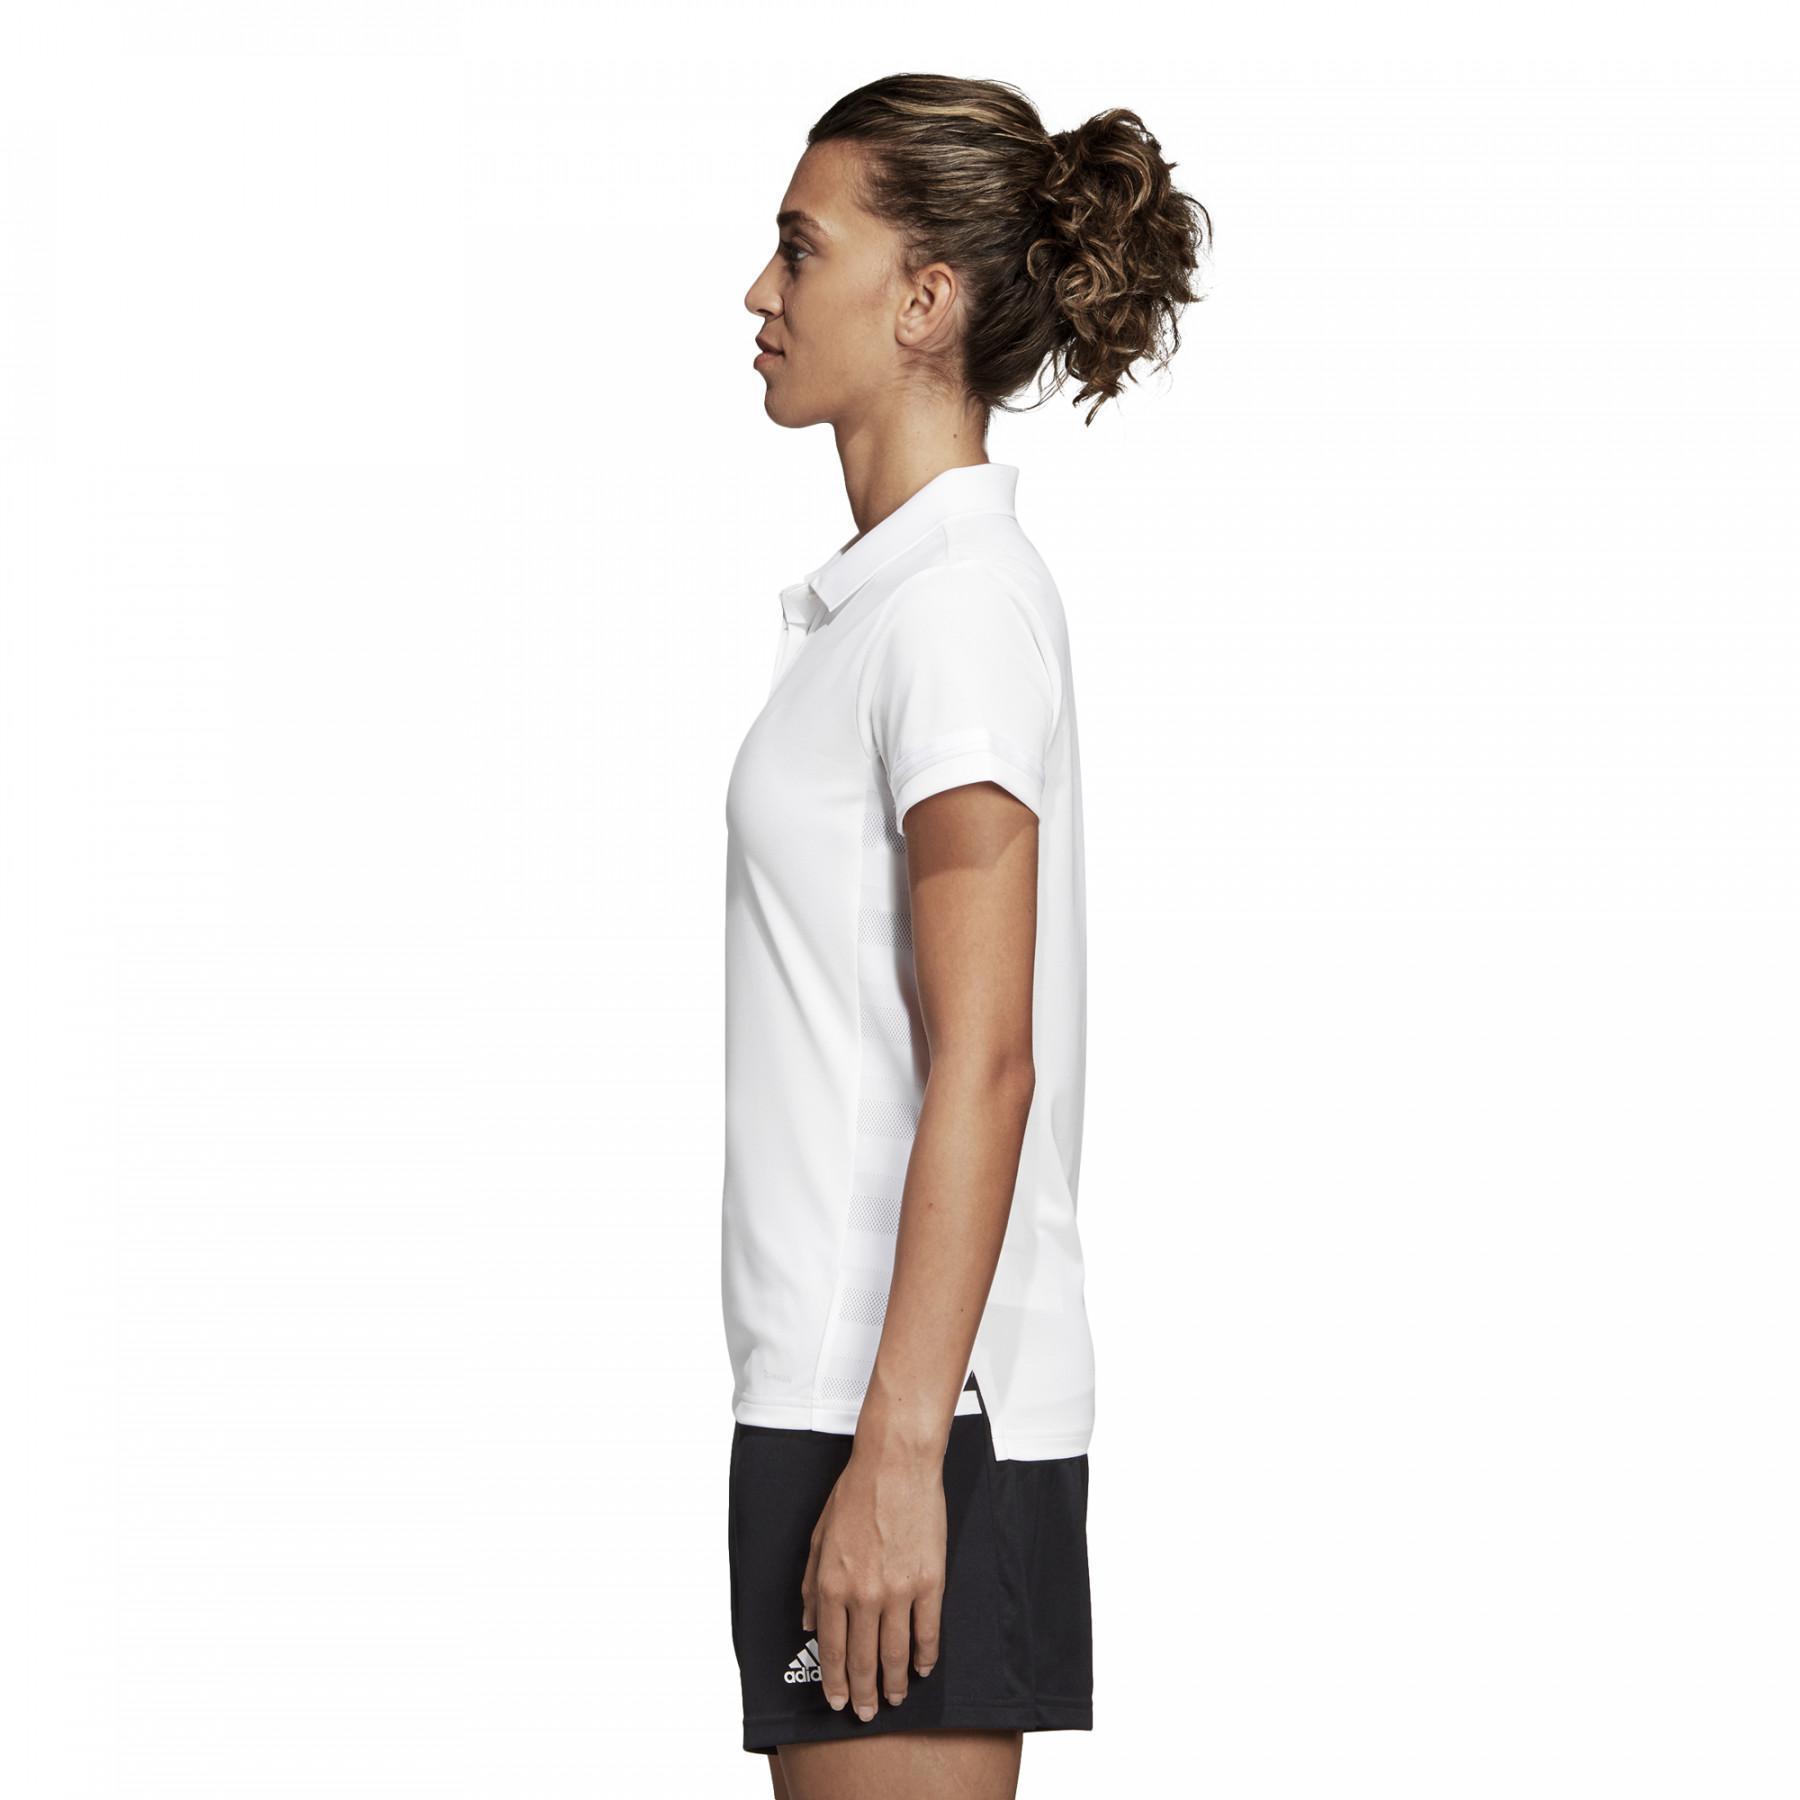 Camisa pólo feminina adidas Team 19